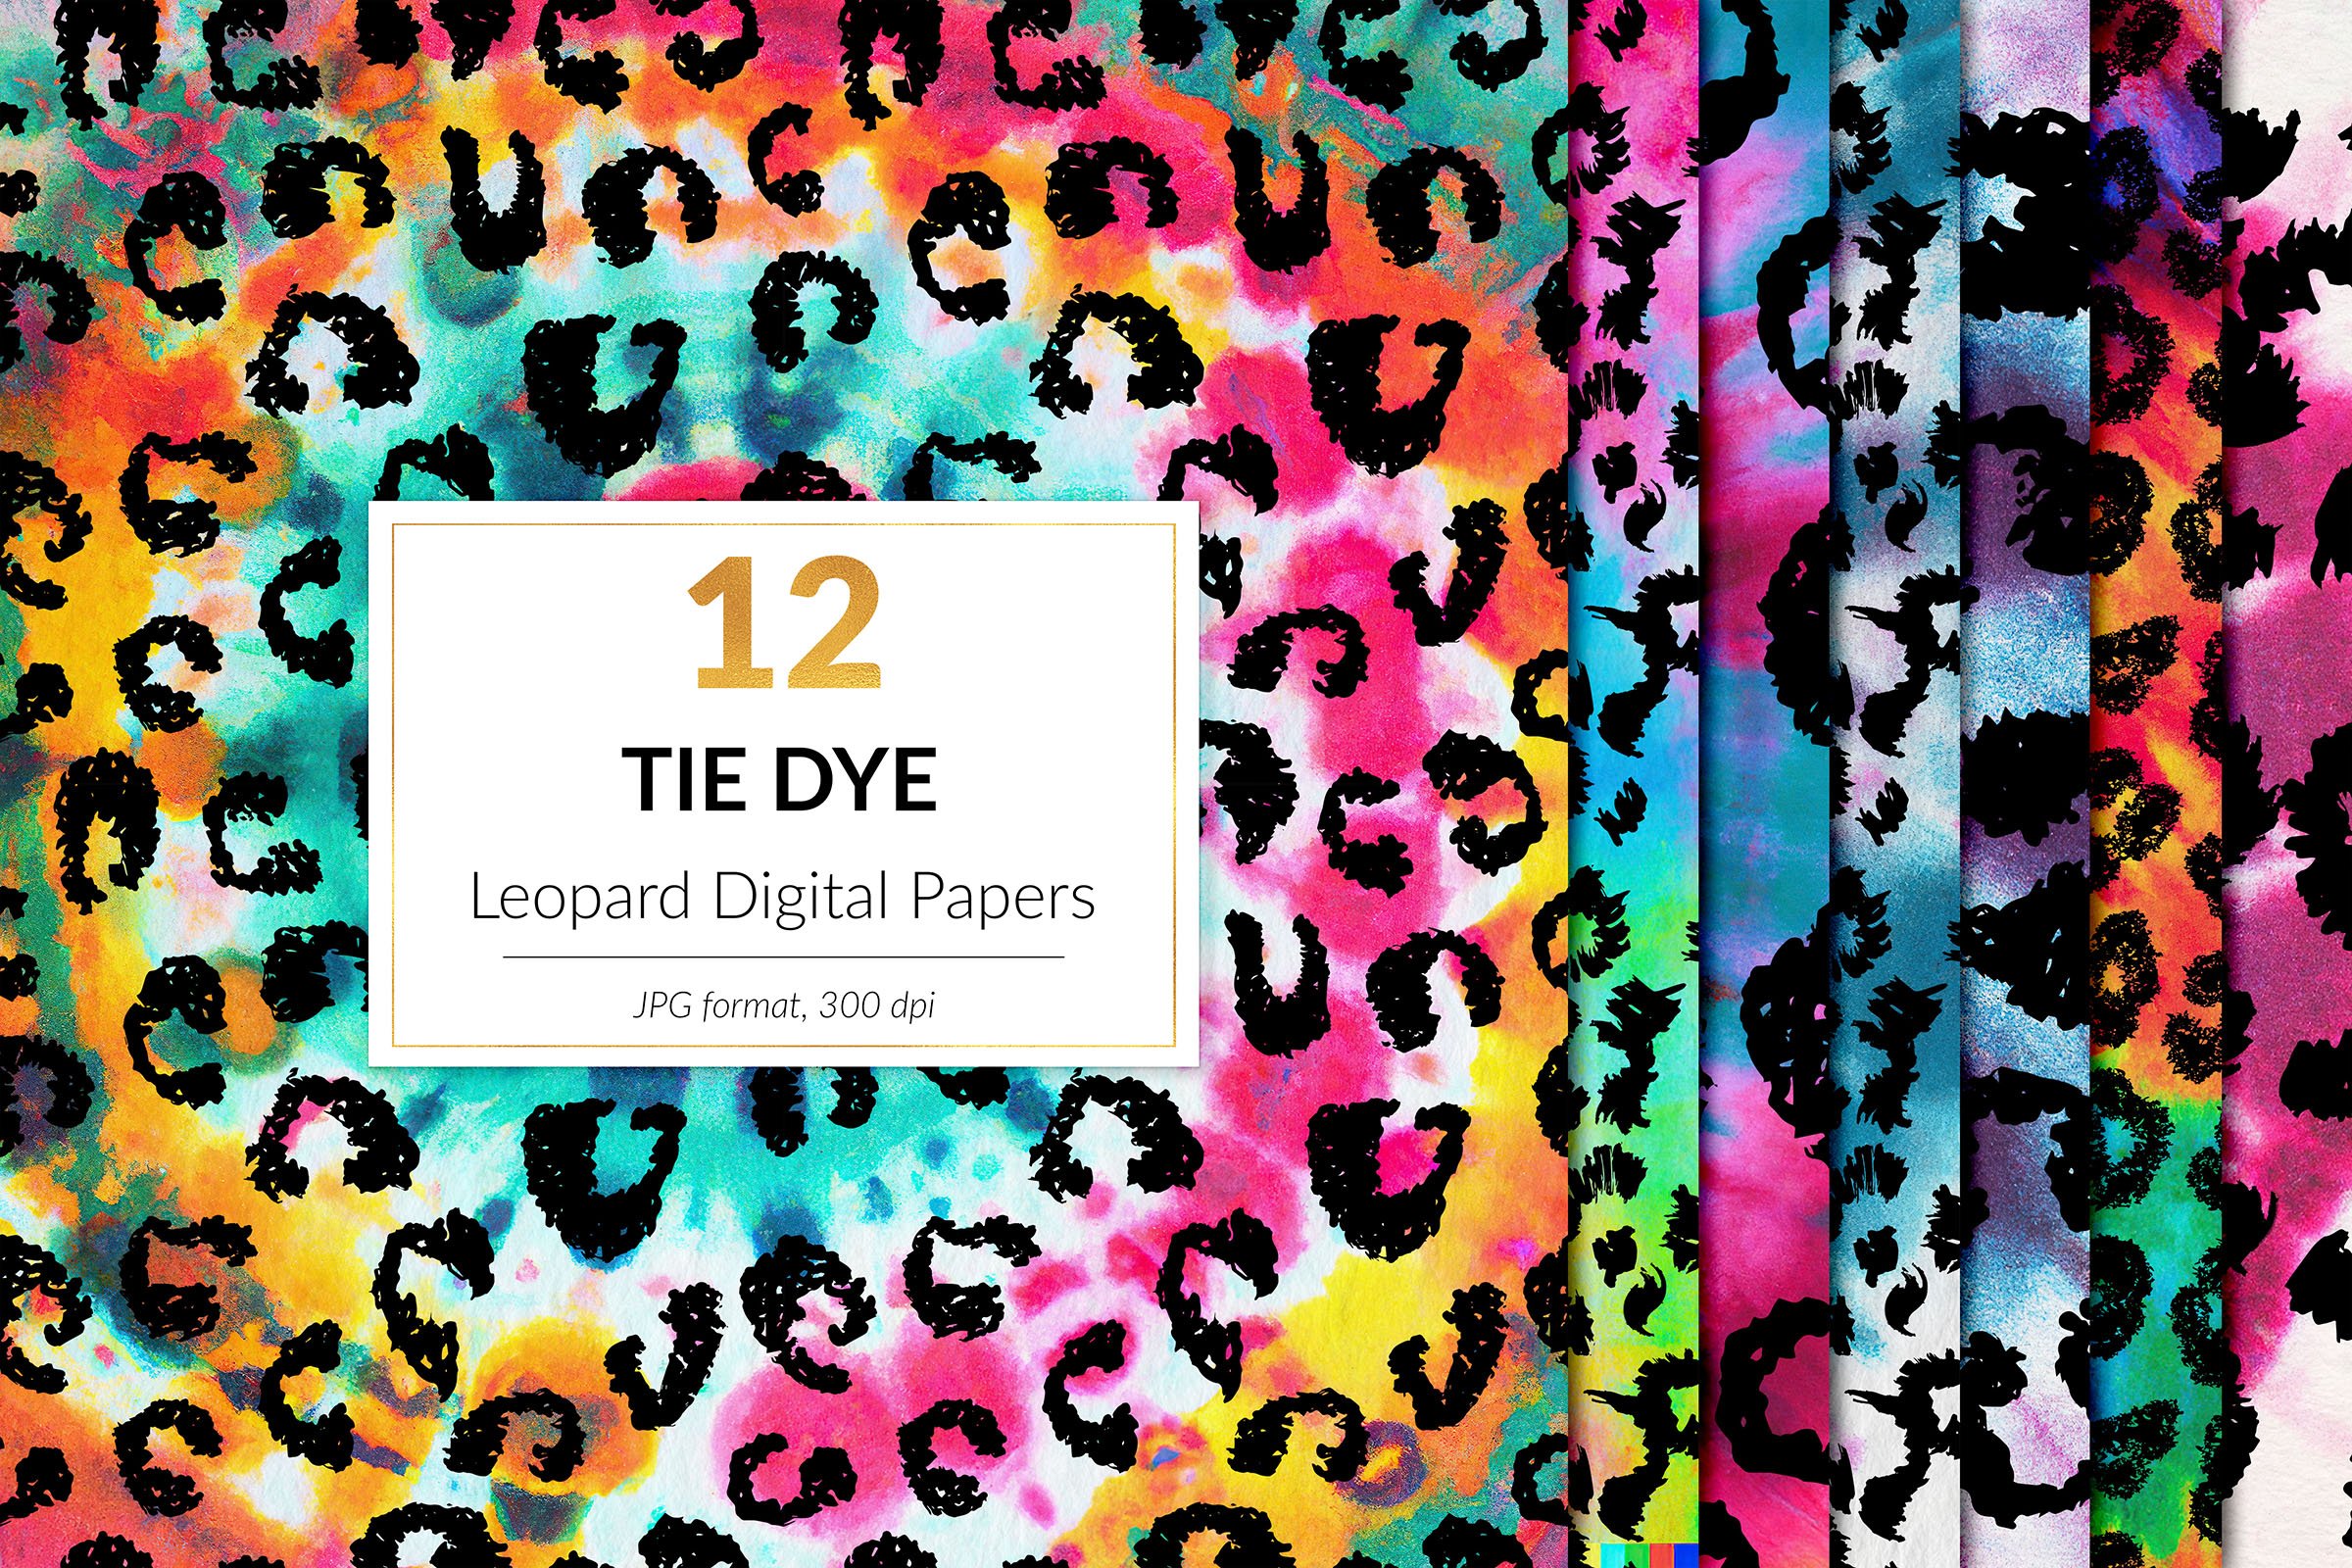 Leopard tie dye digital paper cover image.